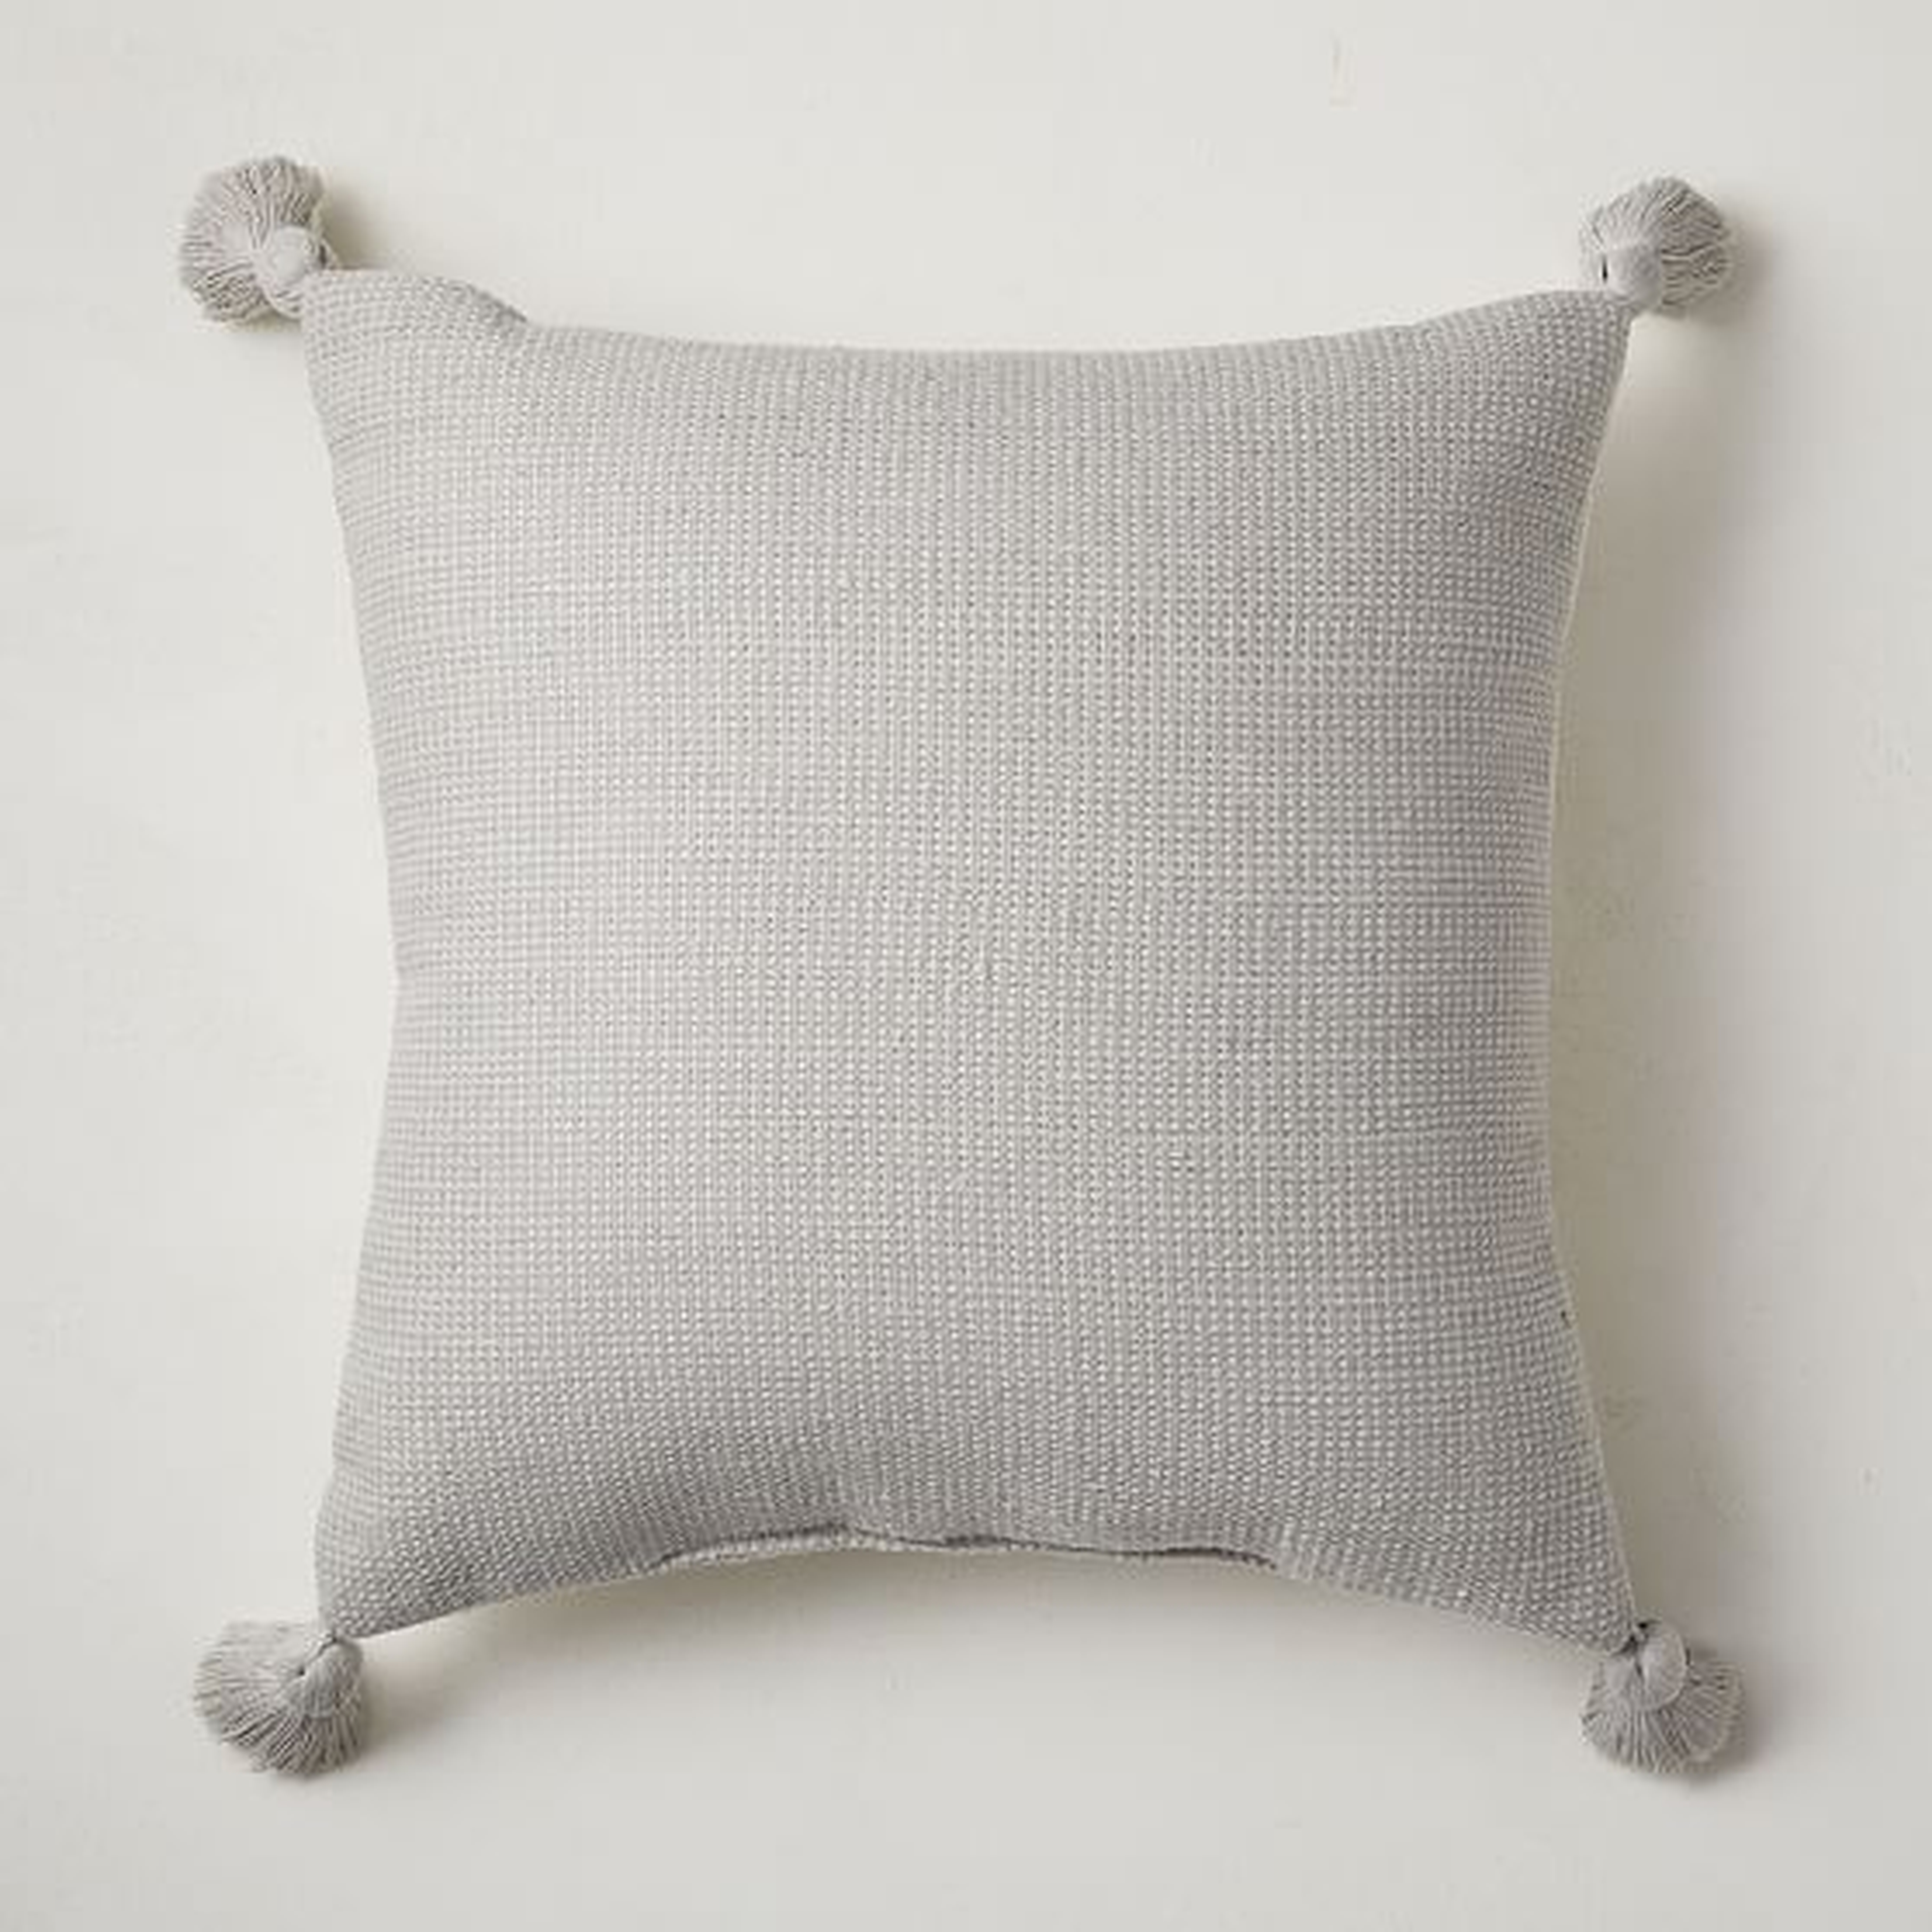 Outdoor Textured Solid Tassel Pillow, 20"x20", Frost Gray - West Elm